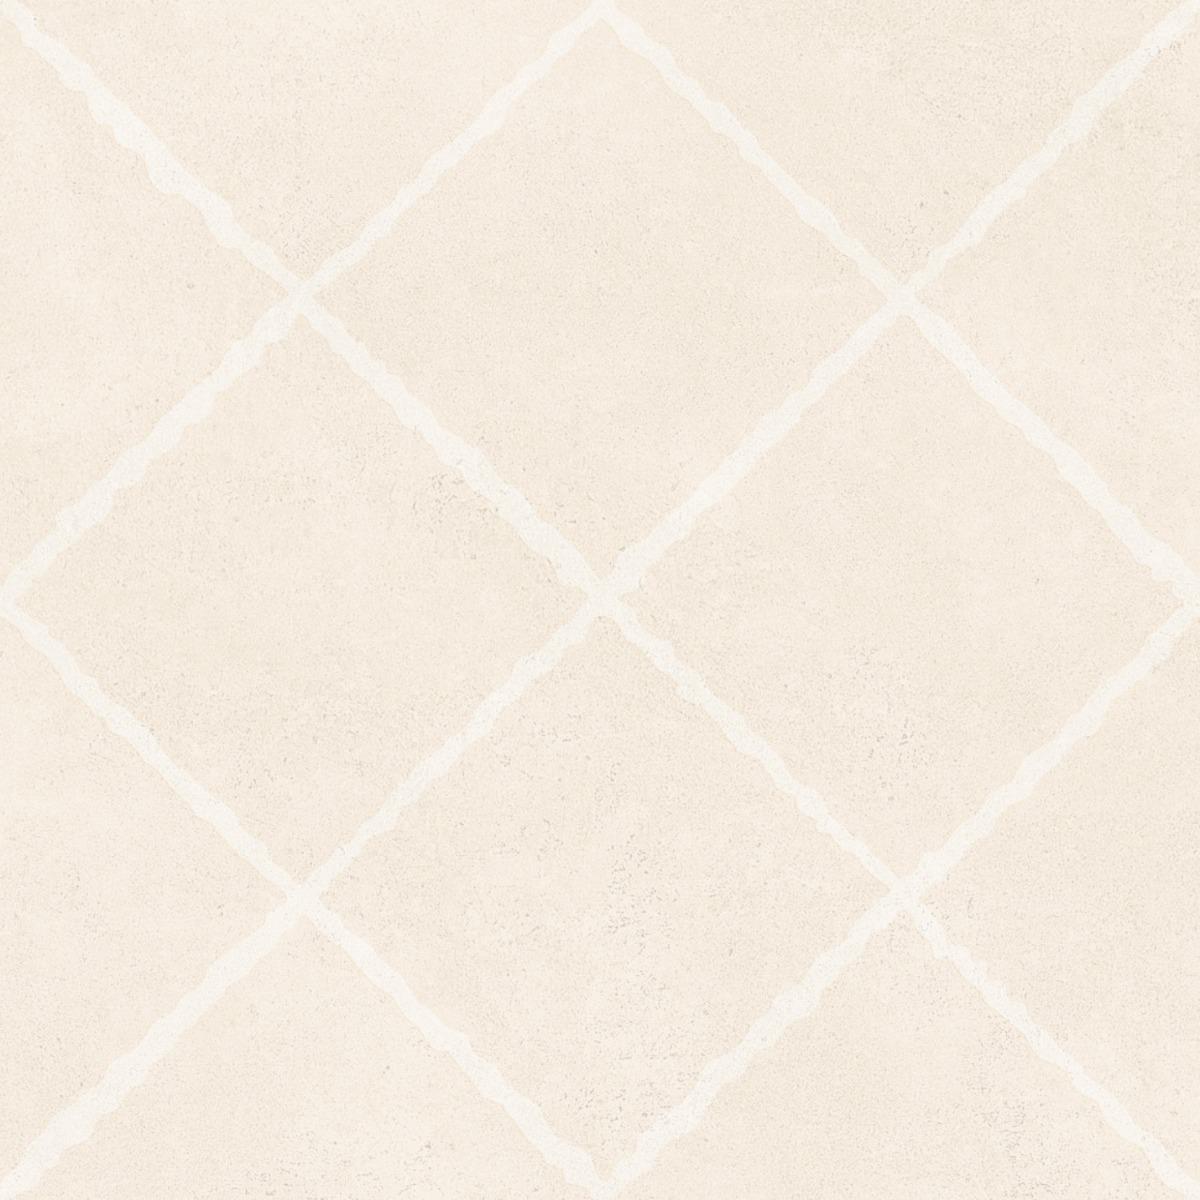 1x1 Tiles for Bathroom Tiles, Kitchen Tiles, Balcony Tiles, Terrace Tiles